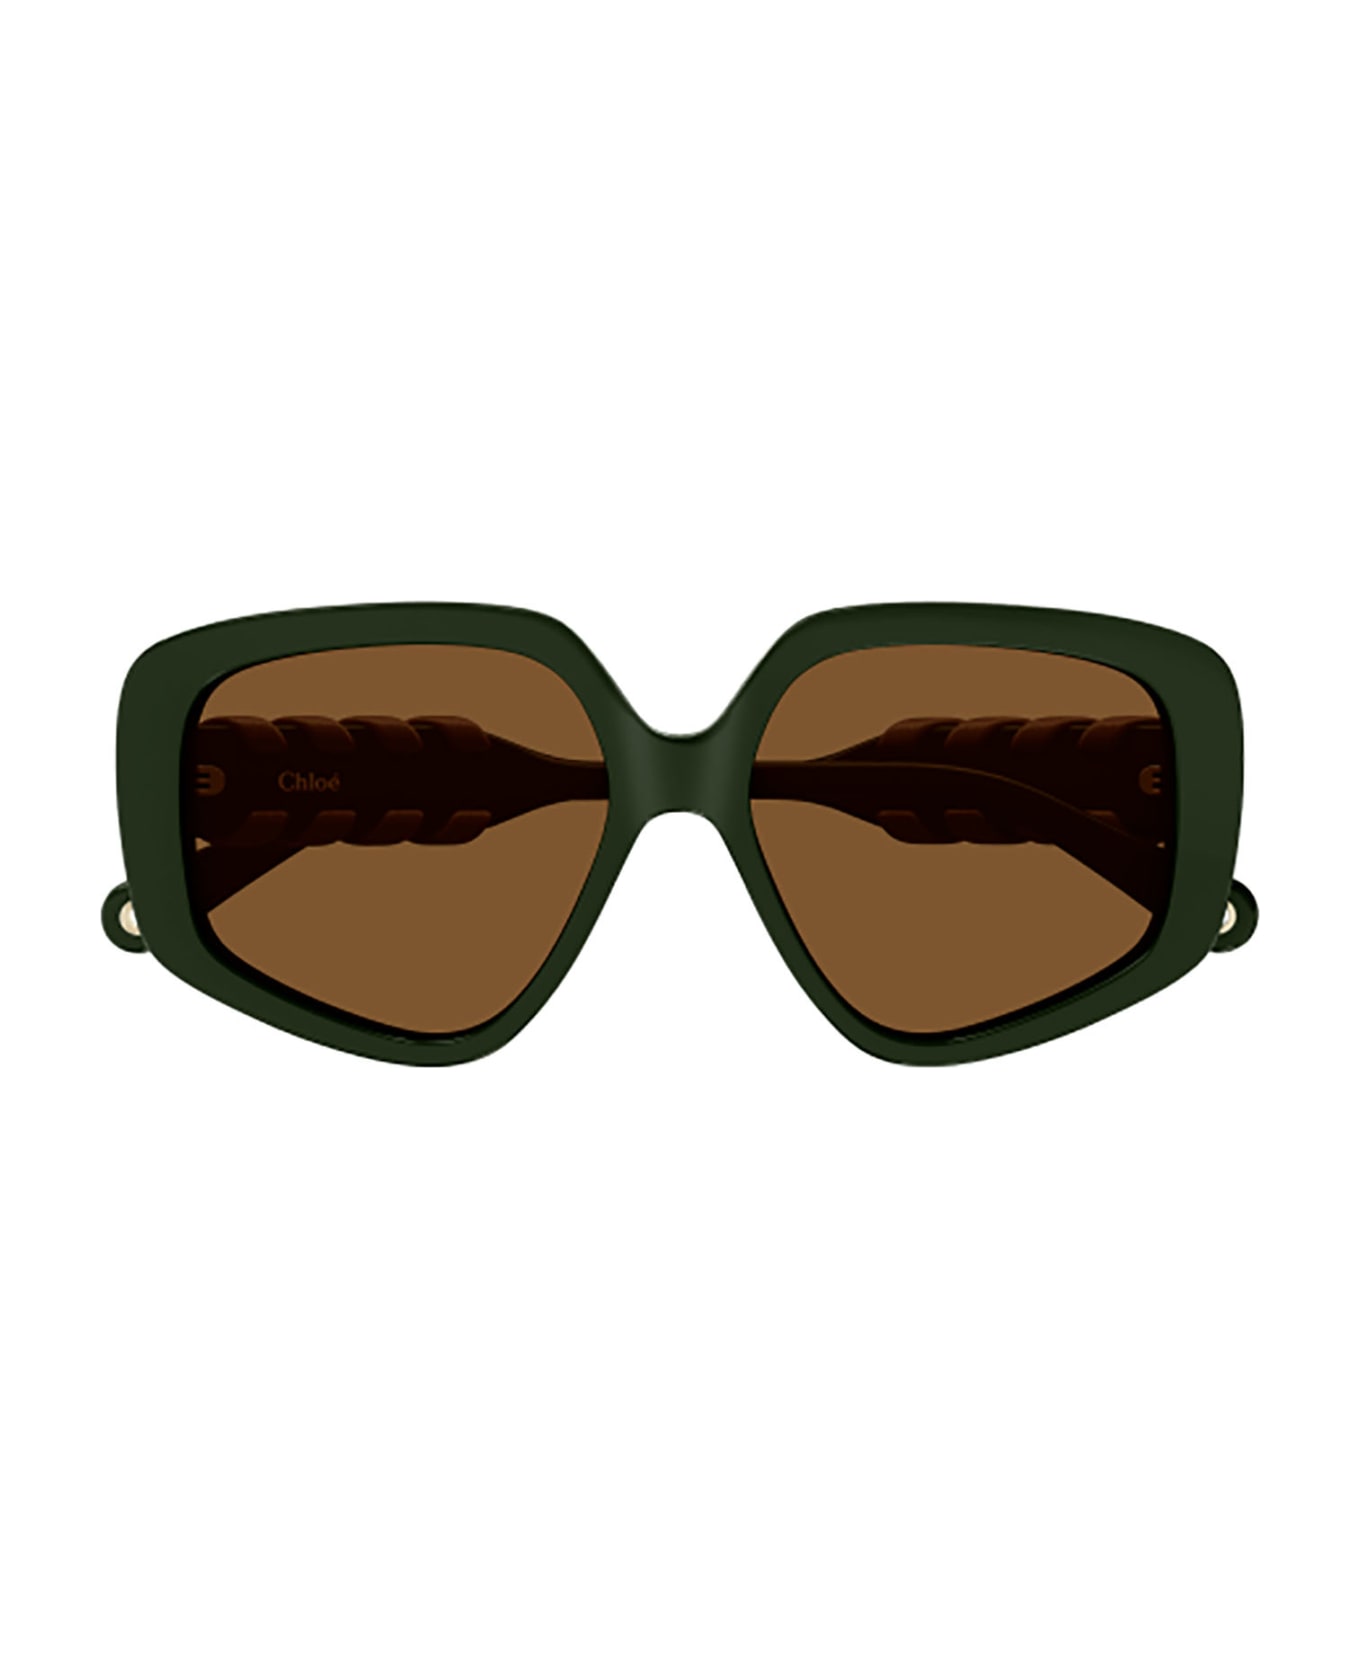 Chloé Eyewear CH0210S Sunglasses - Green Green Brown